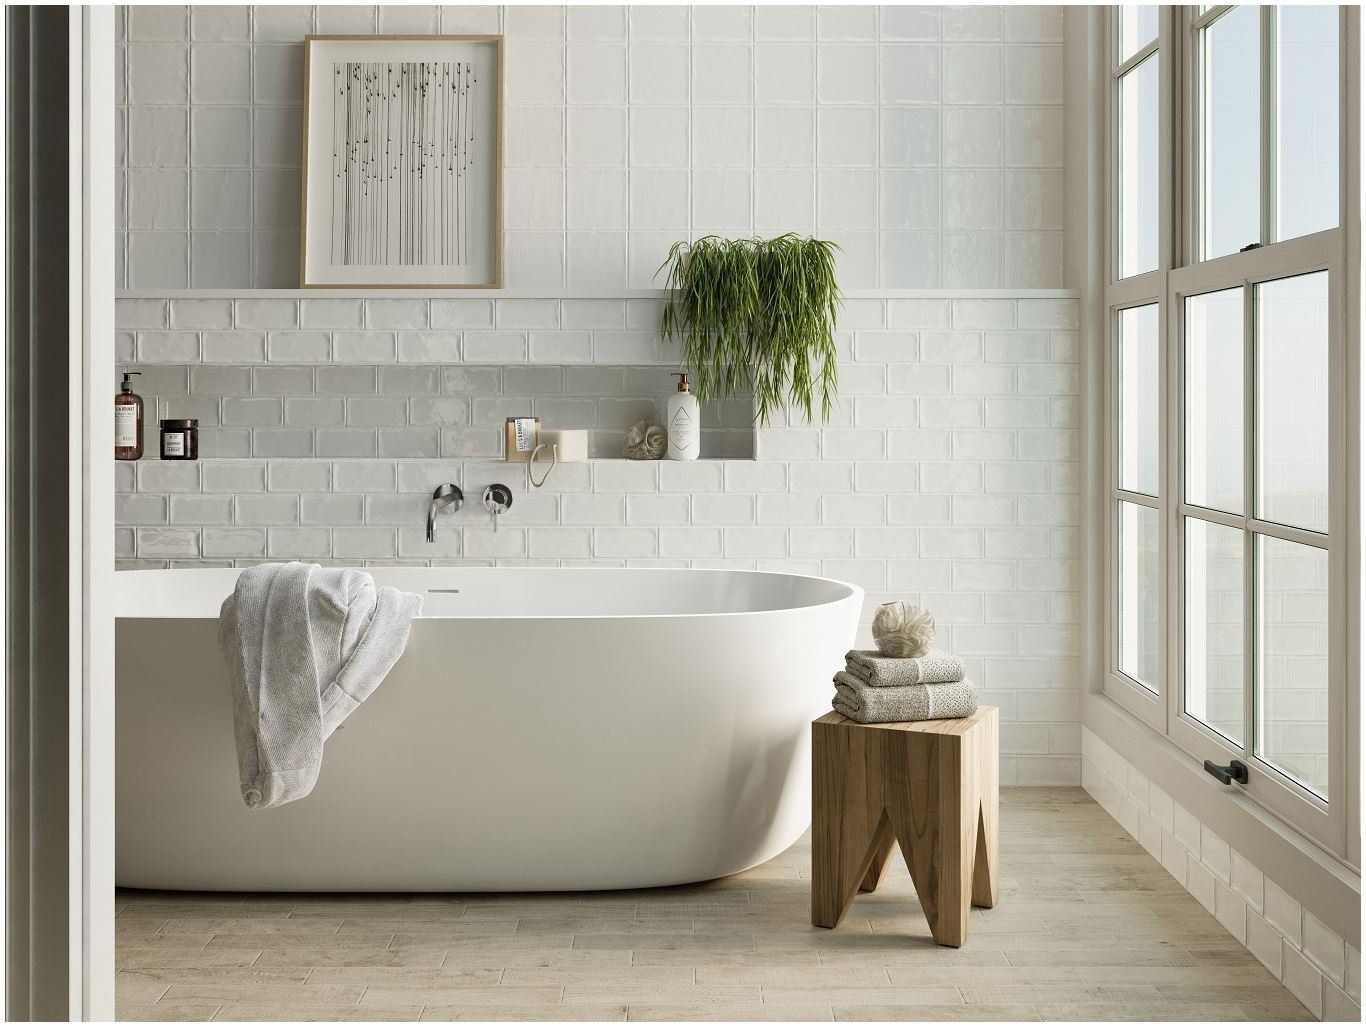 Brickbond white gloss 150x75mm ceramic wall tile, bathroom with free standing bath